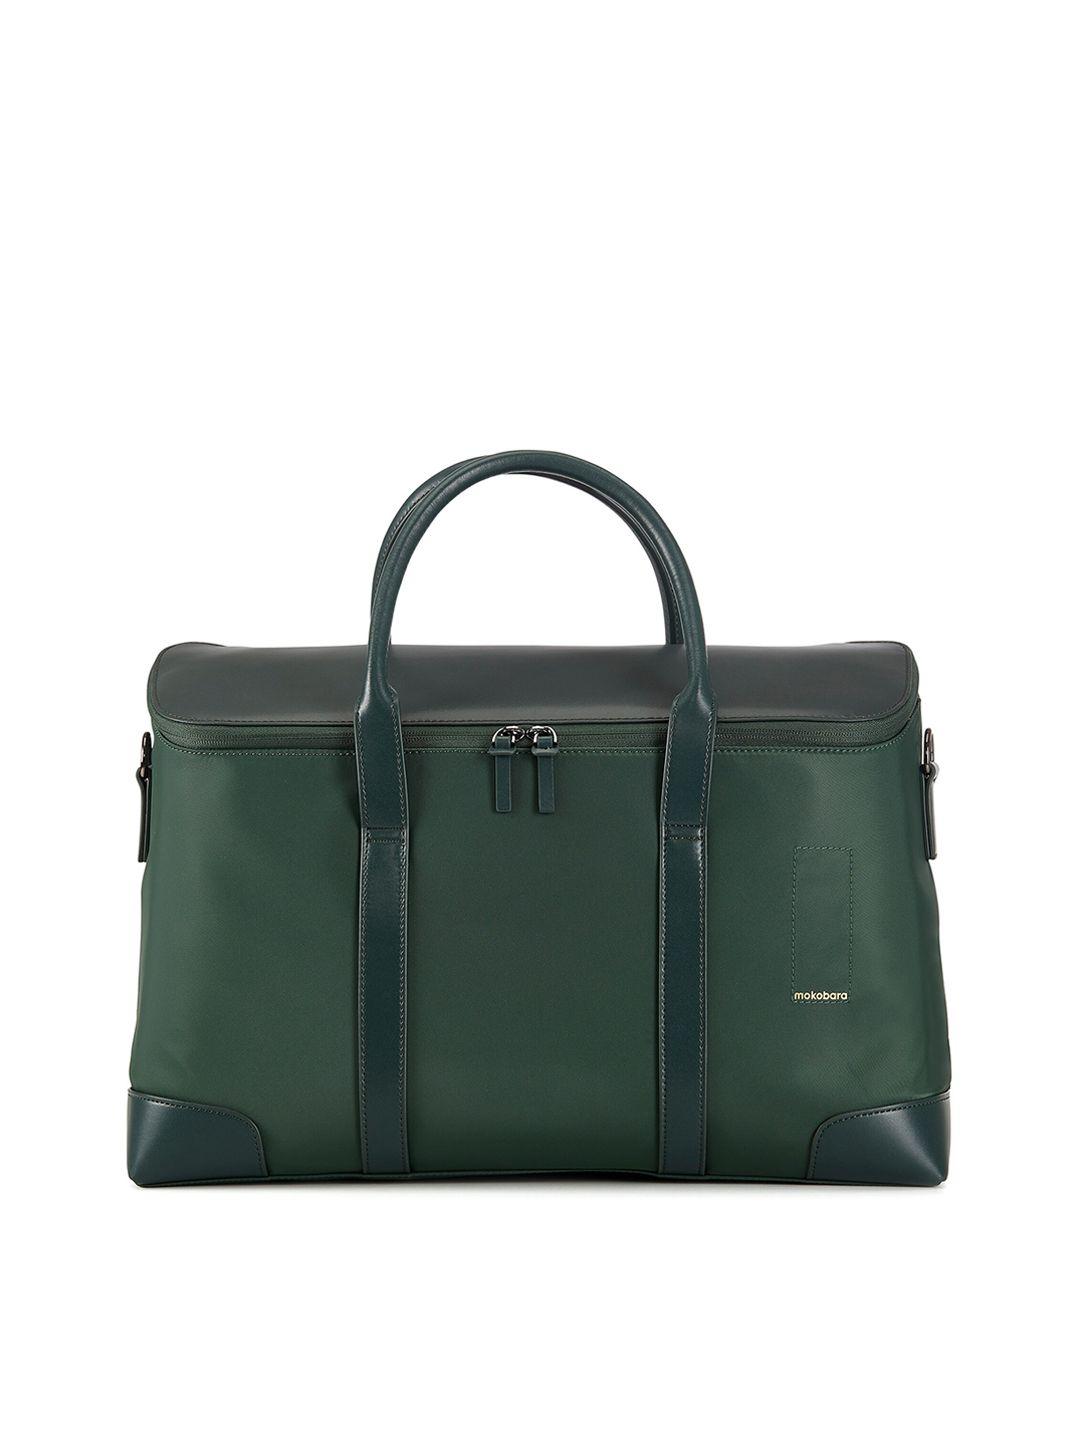 mokobara unisex green solid leather duffel bag